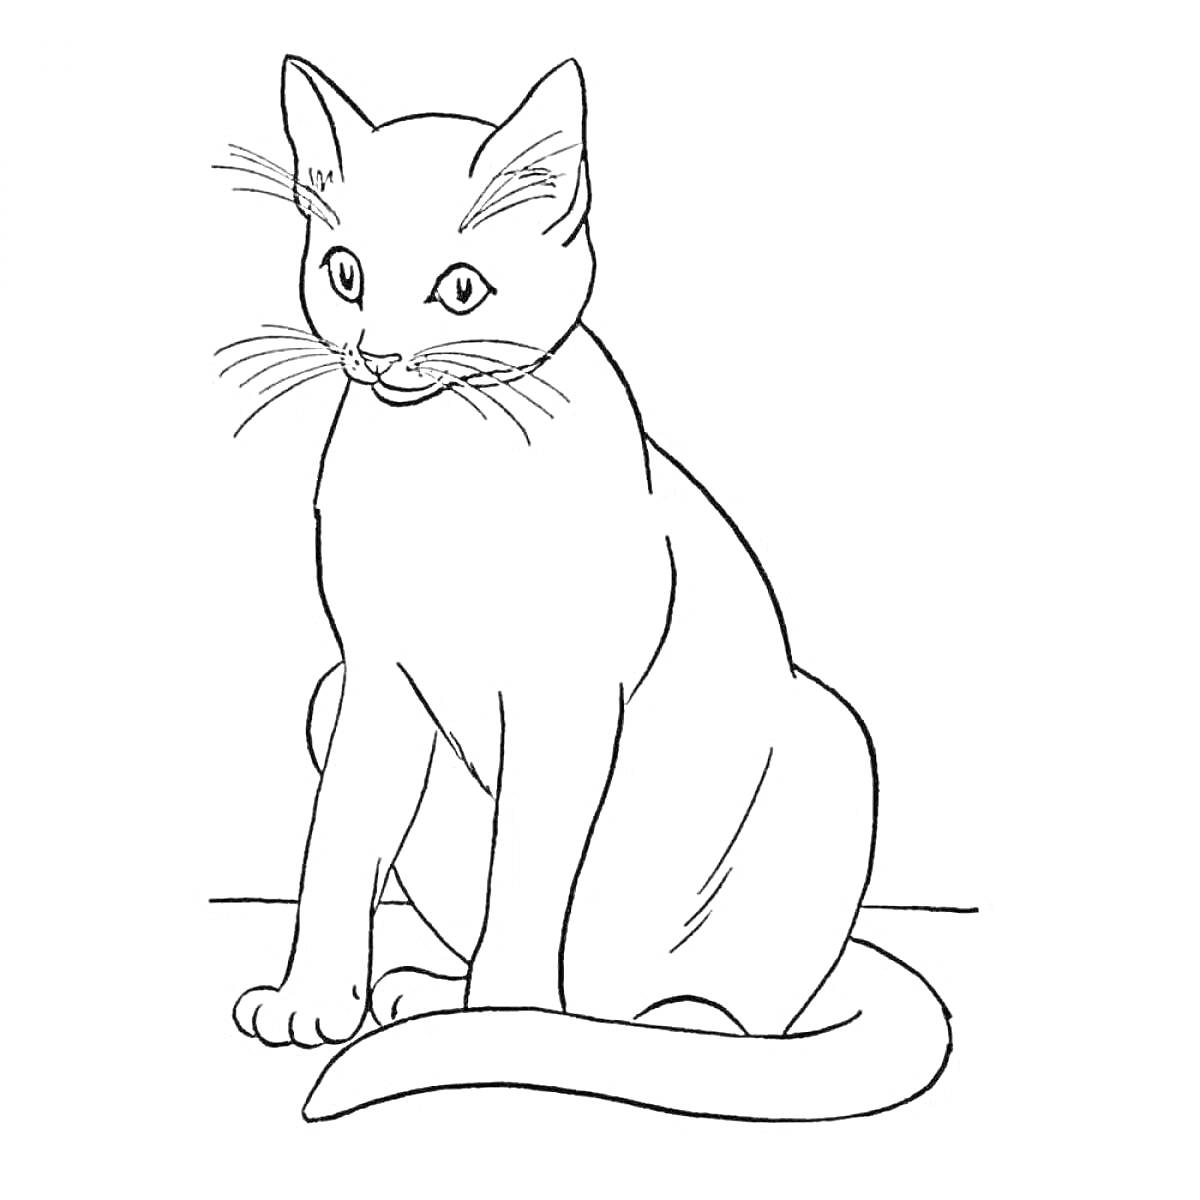 Раскраска изображение кошки, сидящей на полу